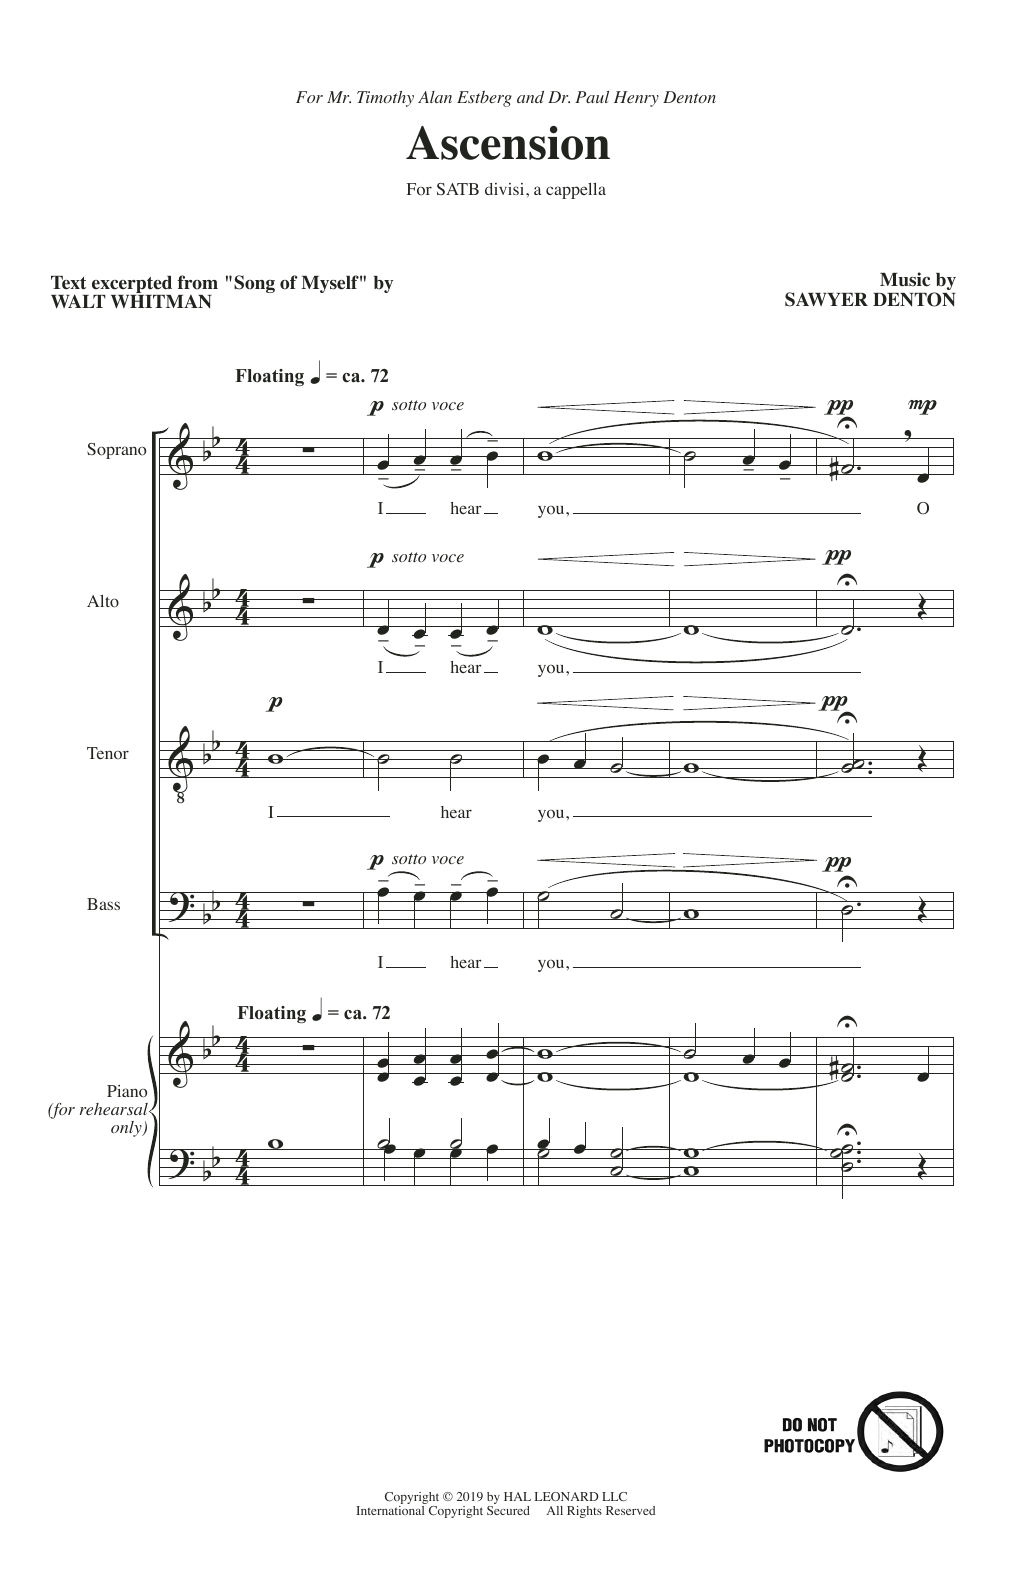 Sawyer Denton Ascension Sheet Music Notes & Chords for SATB Choir - Download or Print PDF